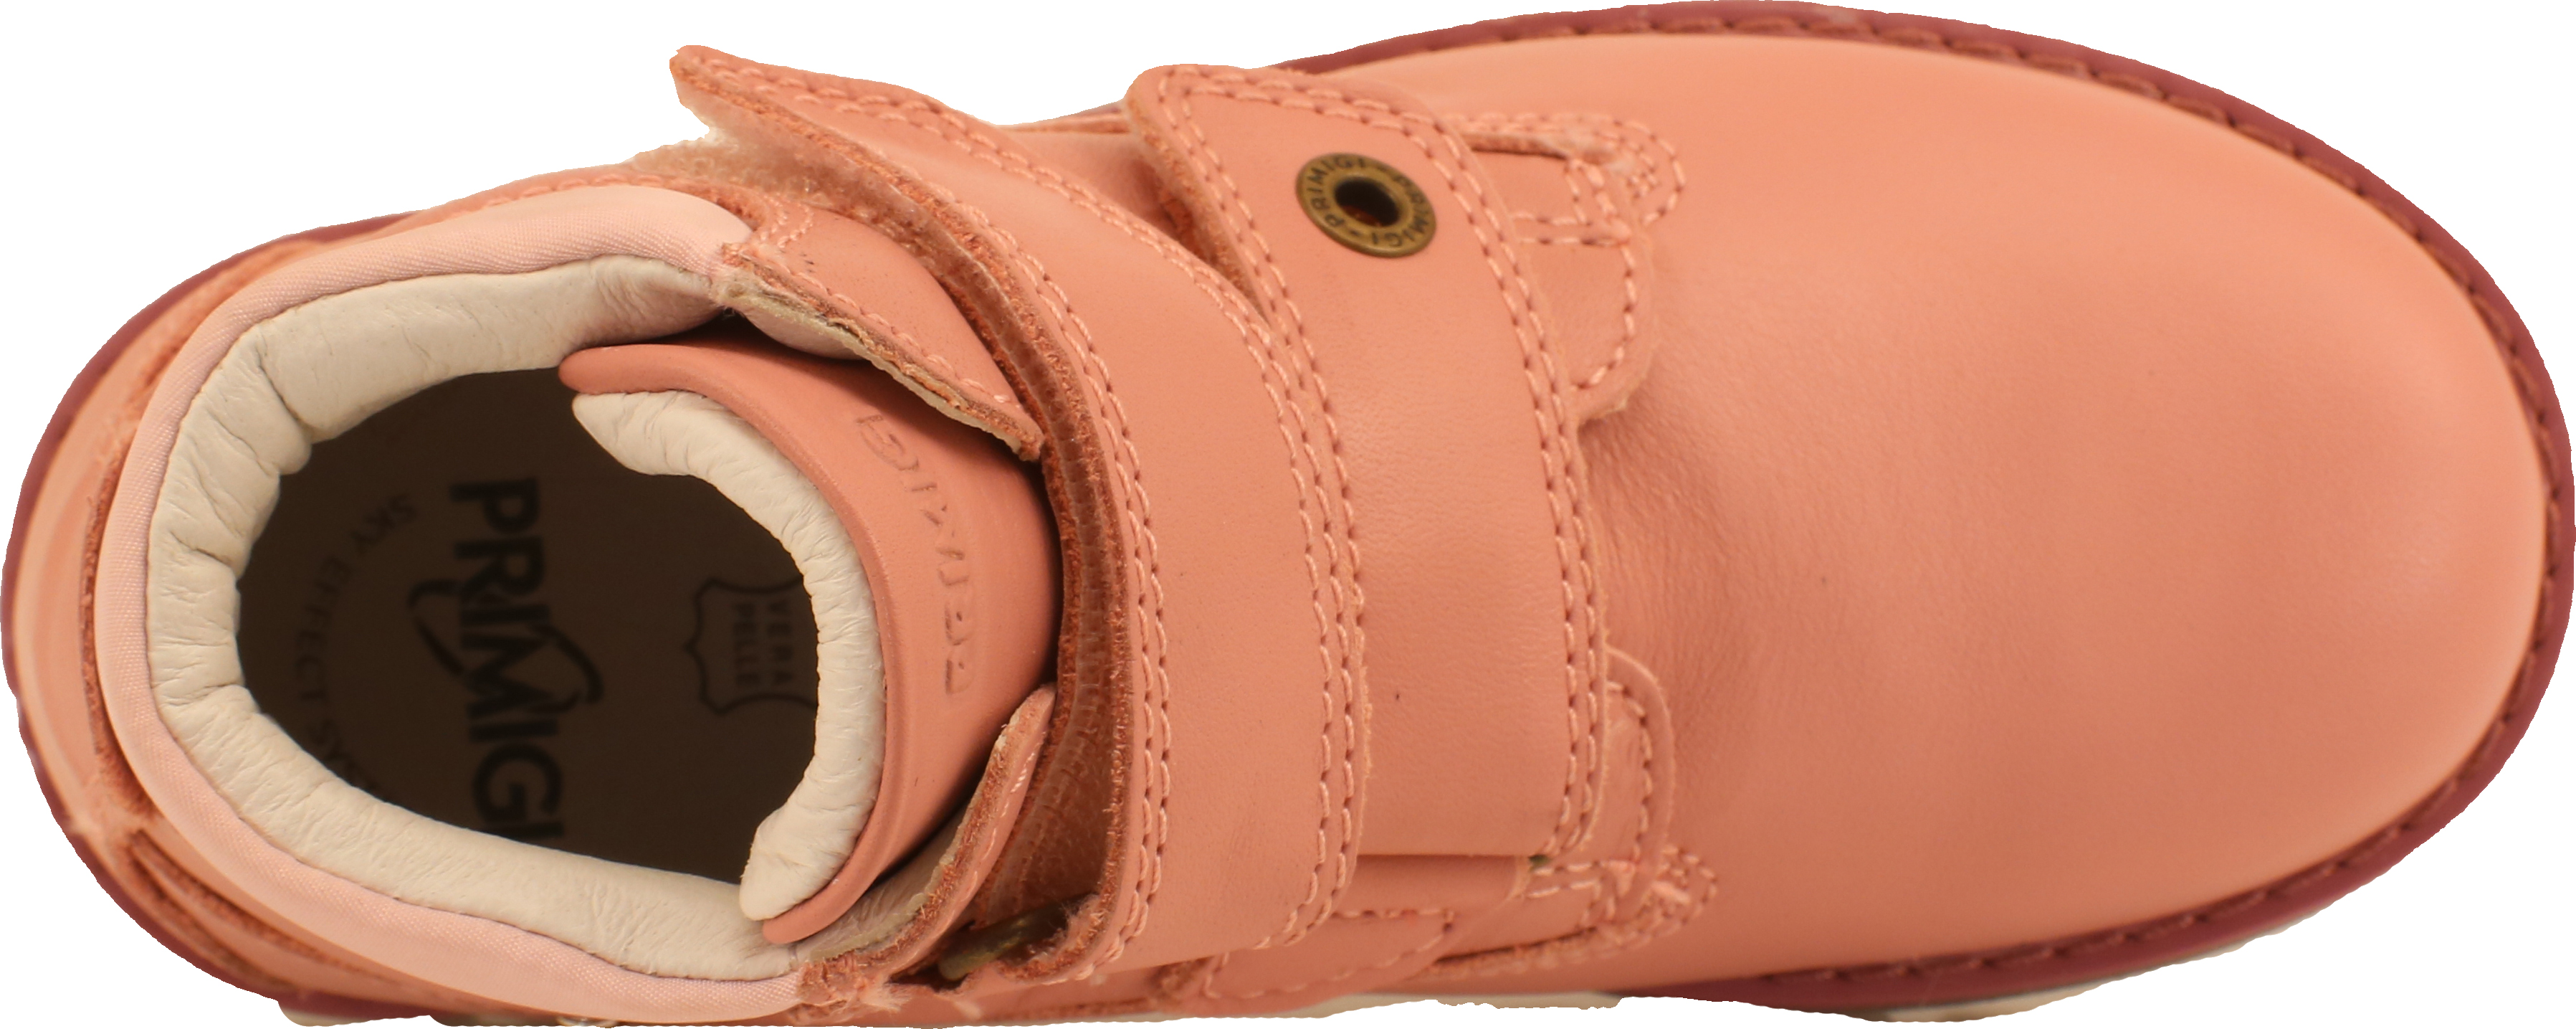 Pca 84106 - Nappa Soft - Rose Antico Leather